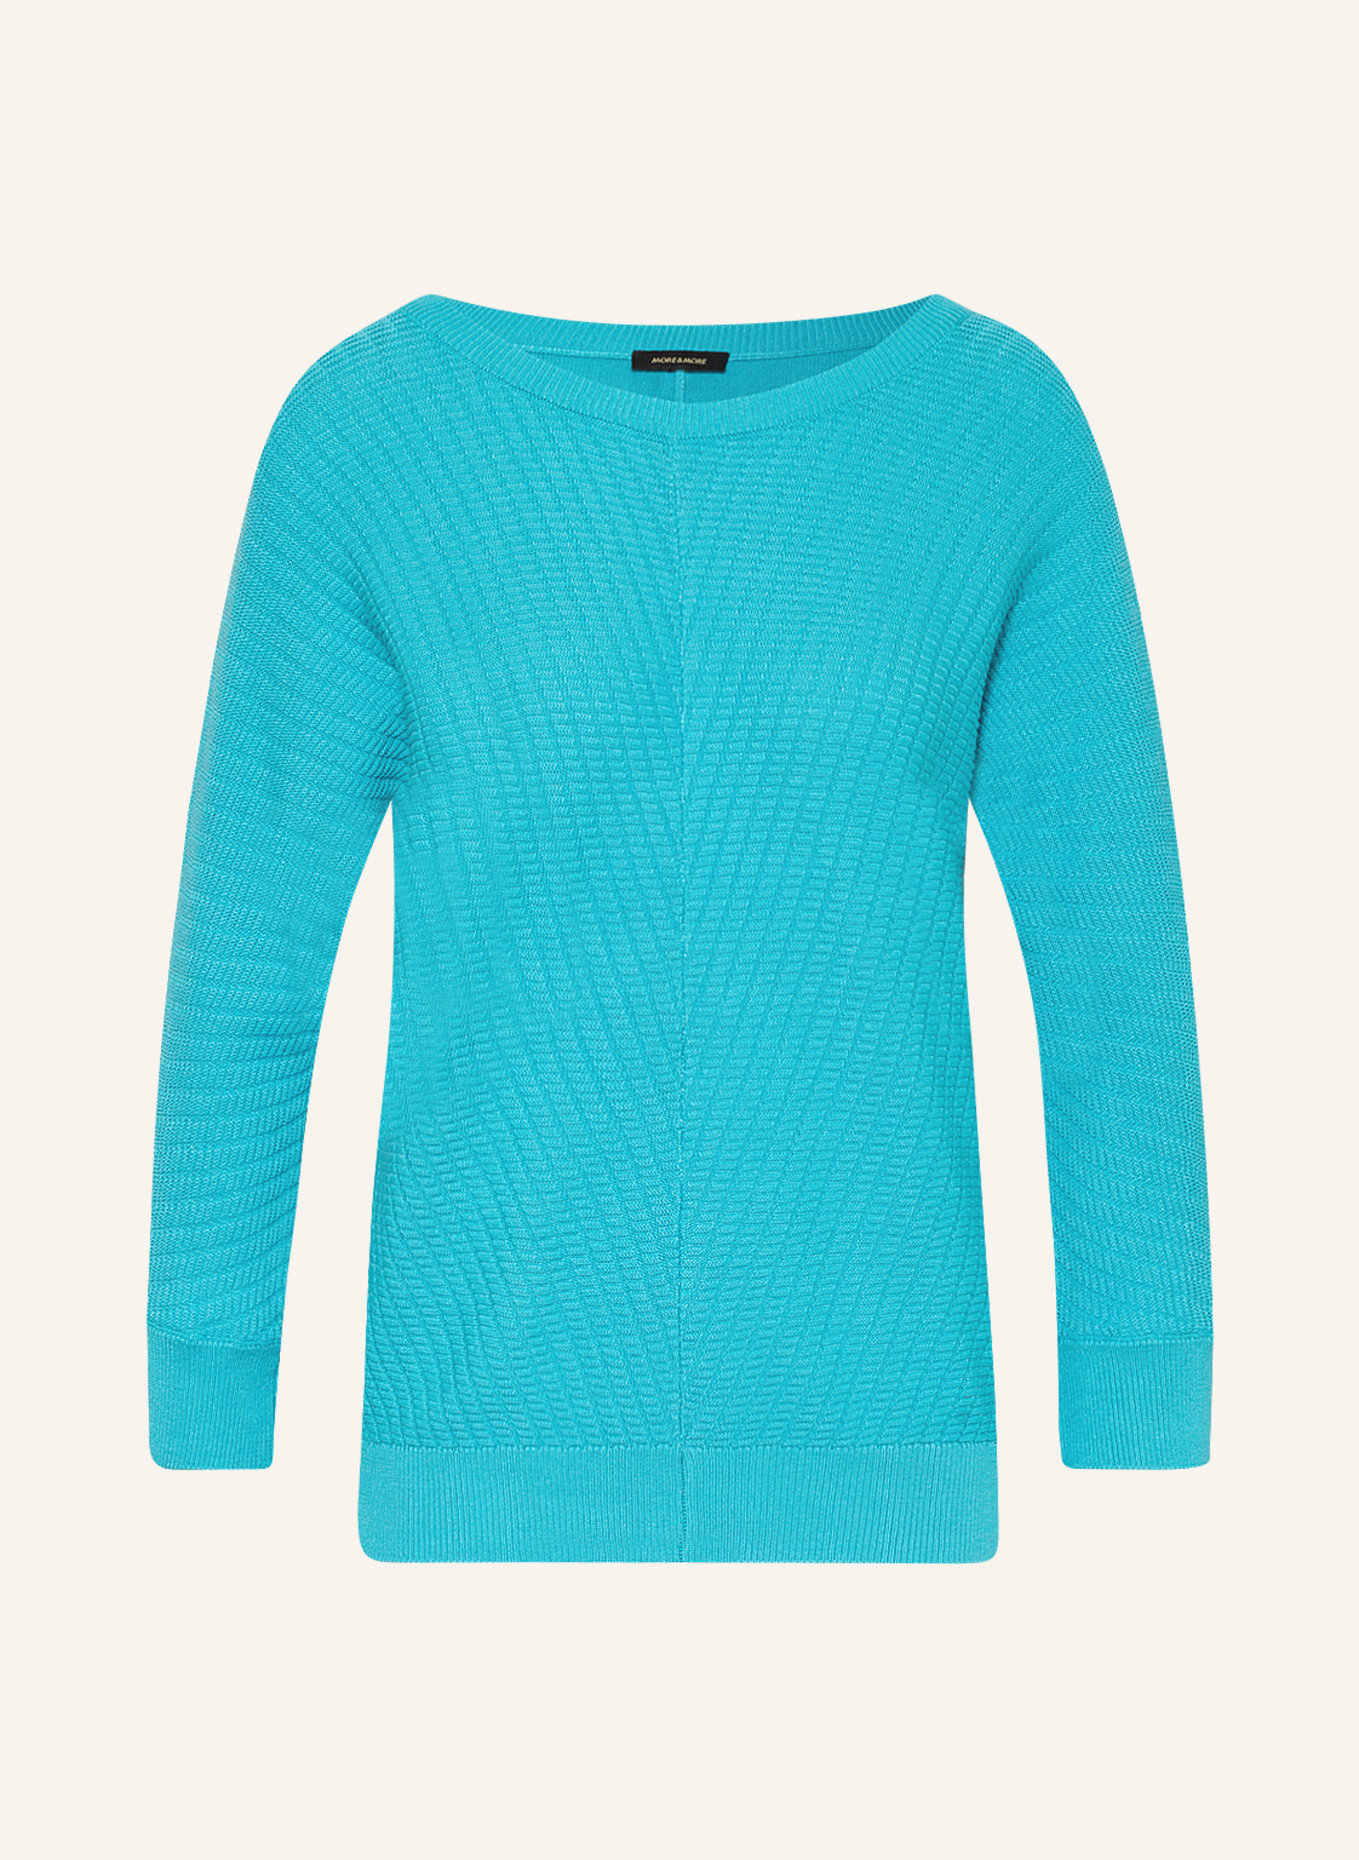 MORE & MORE Pullover mit 3/4-Arm, Farbe: TÜRKIS (Bild 1)